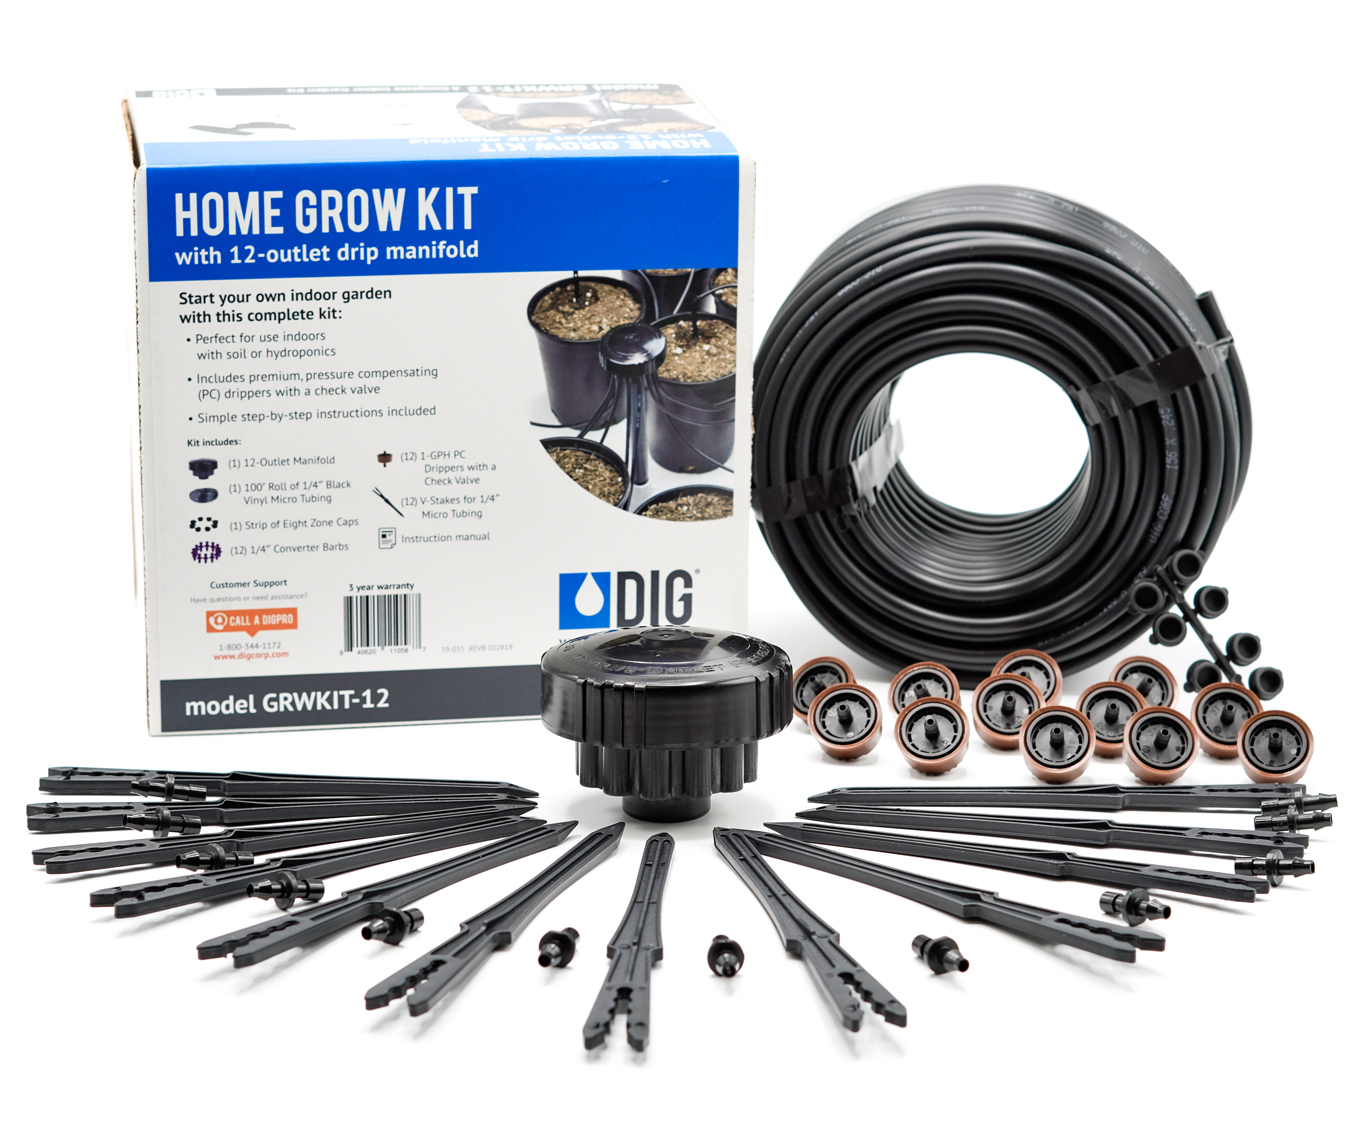 GRWKIT-12 Home Grow Drip Kit